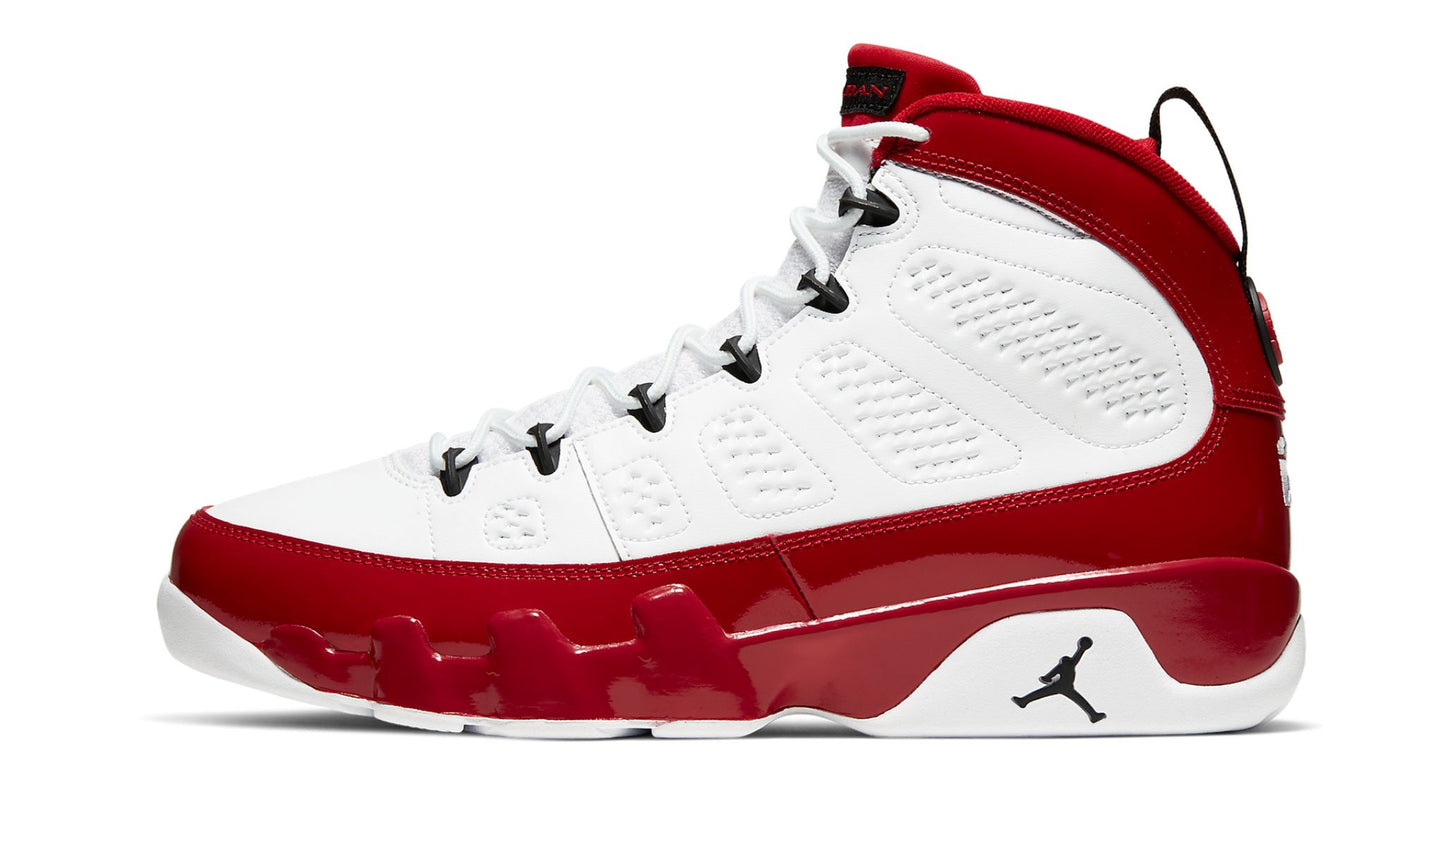 Air Jordan 9 "White/Red/Black"